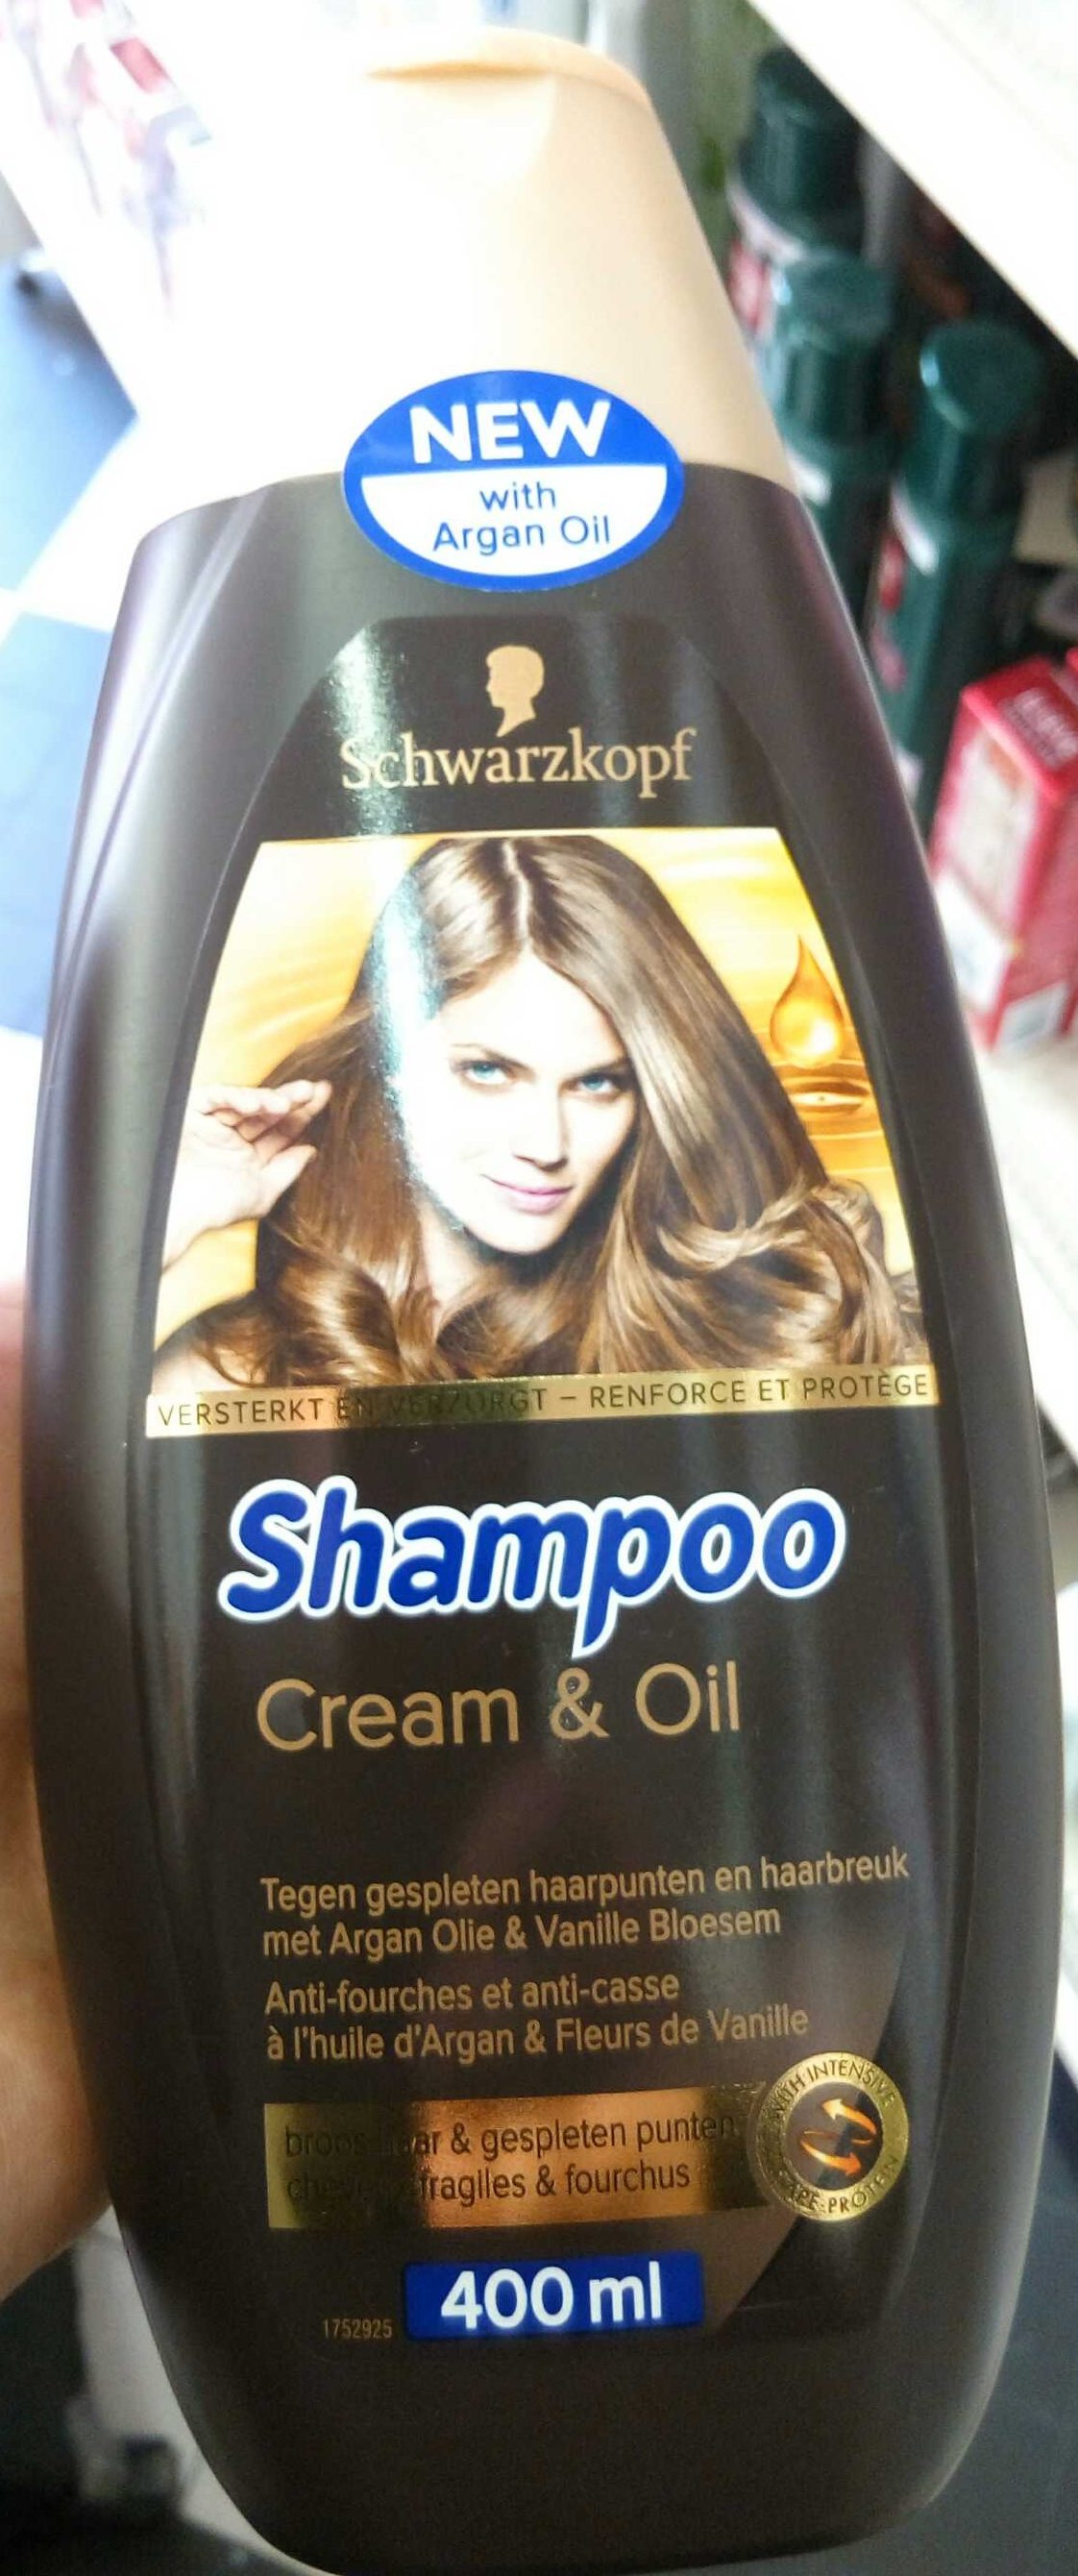 Shampoo Cream & Oil - Produit - fr